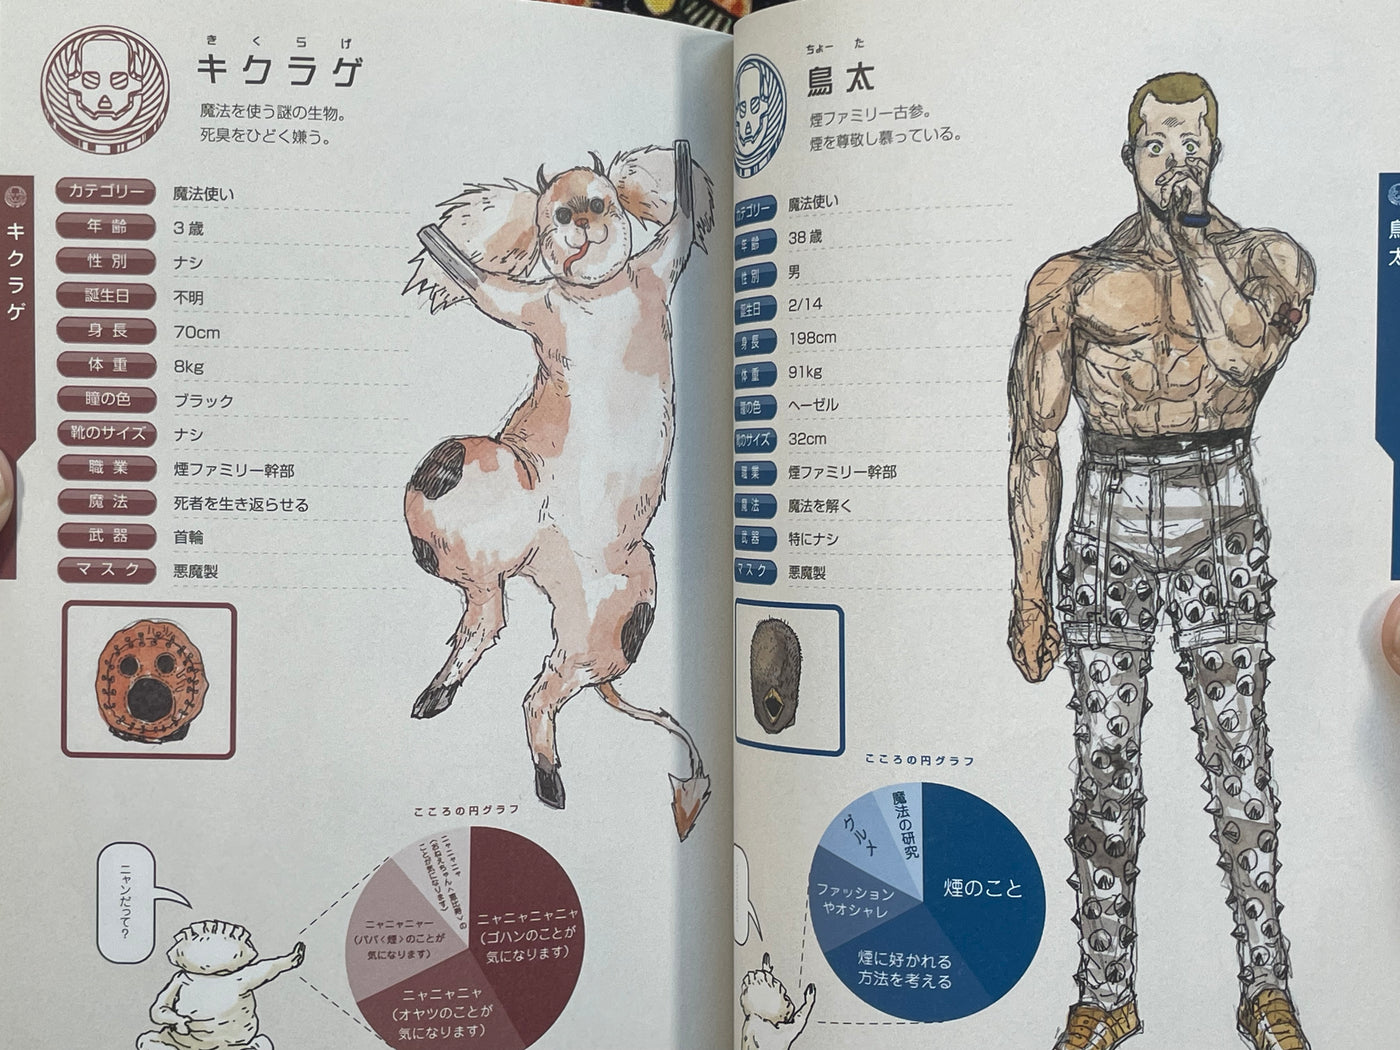 Dorohedoro All-Star Character Guide (2013) by Q. Hayashida